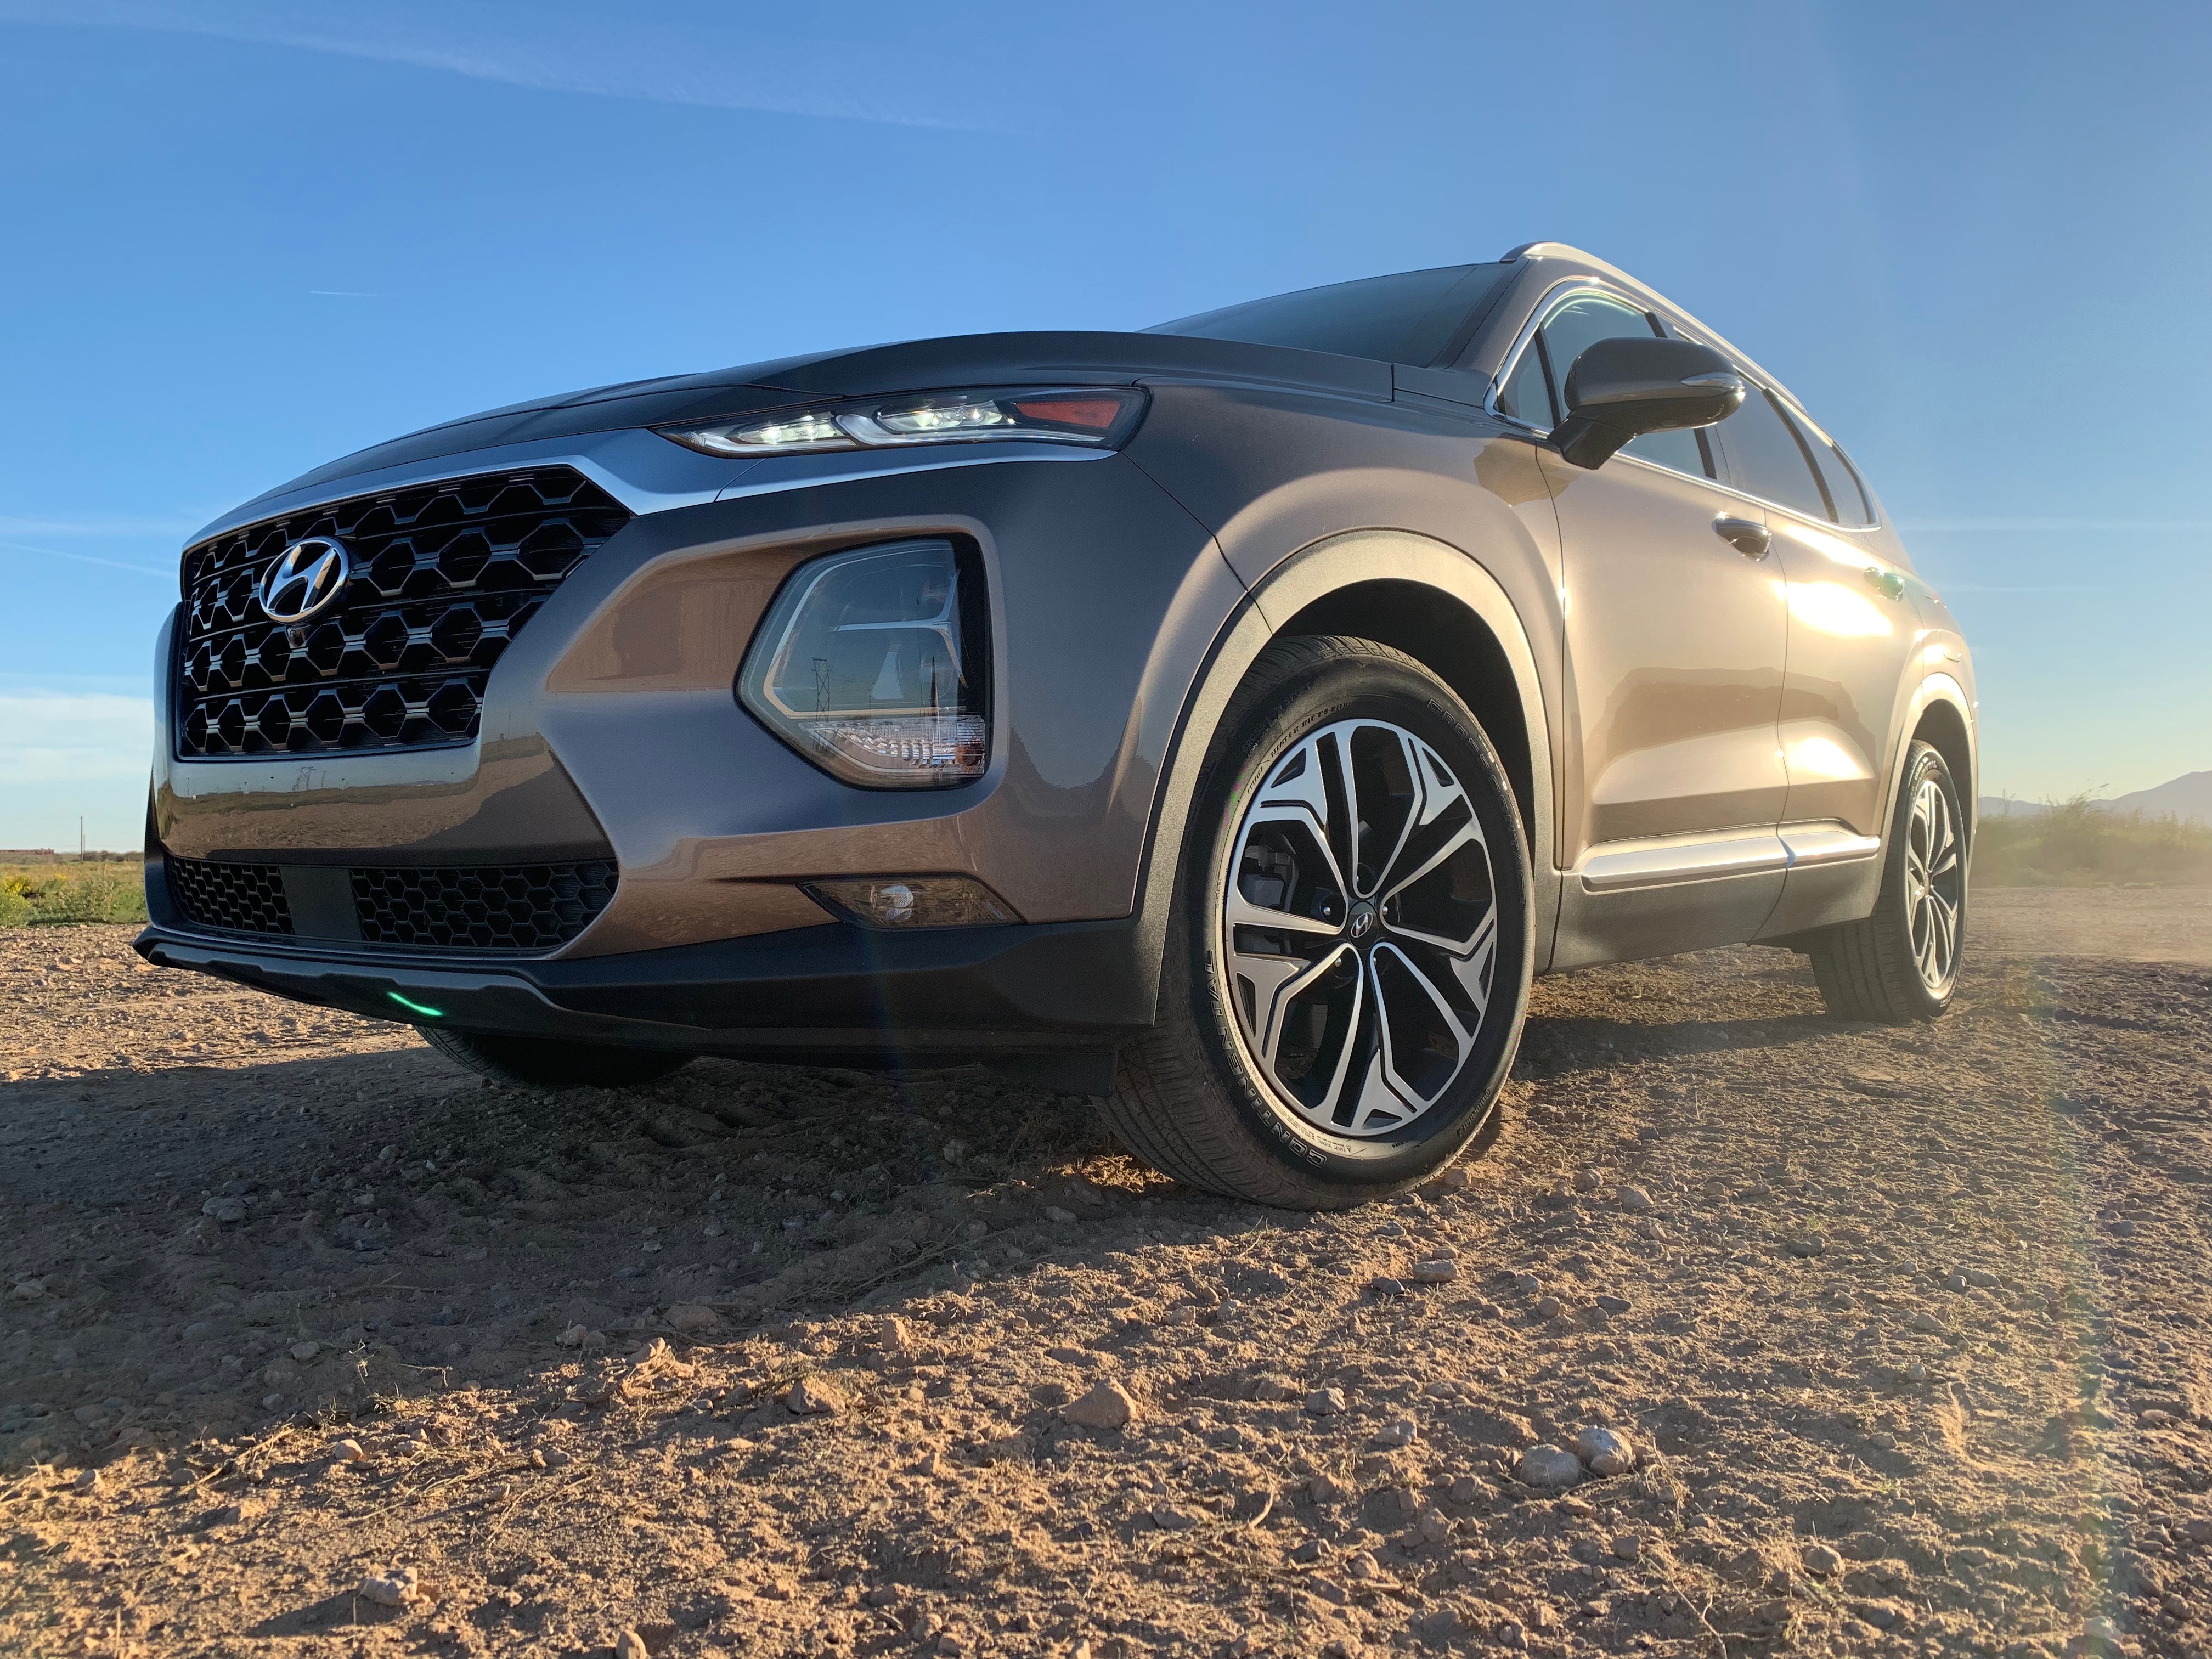 2019 Hyundai Santa Fe, Hyundai staking claim in mid-size crossover market with 2019 Santa Fe, ClassicCars.com Journal